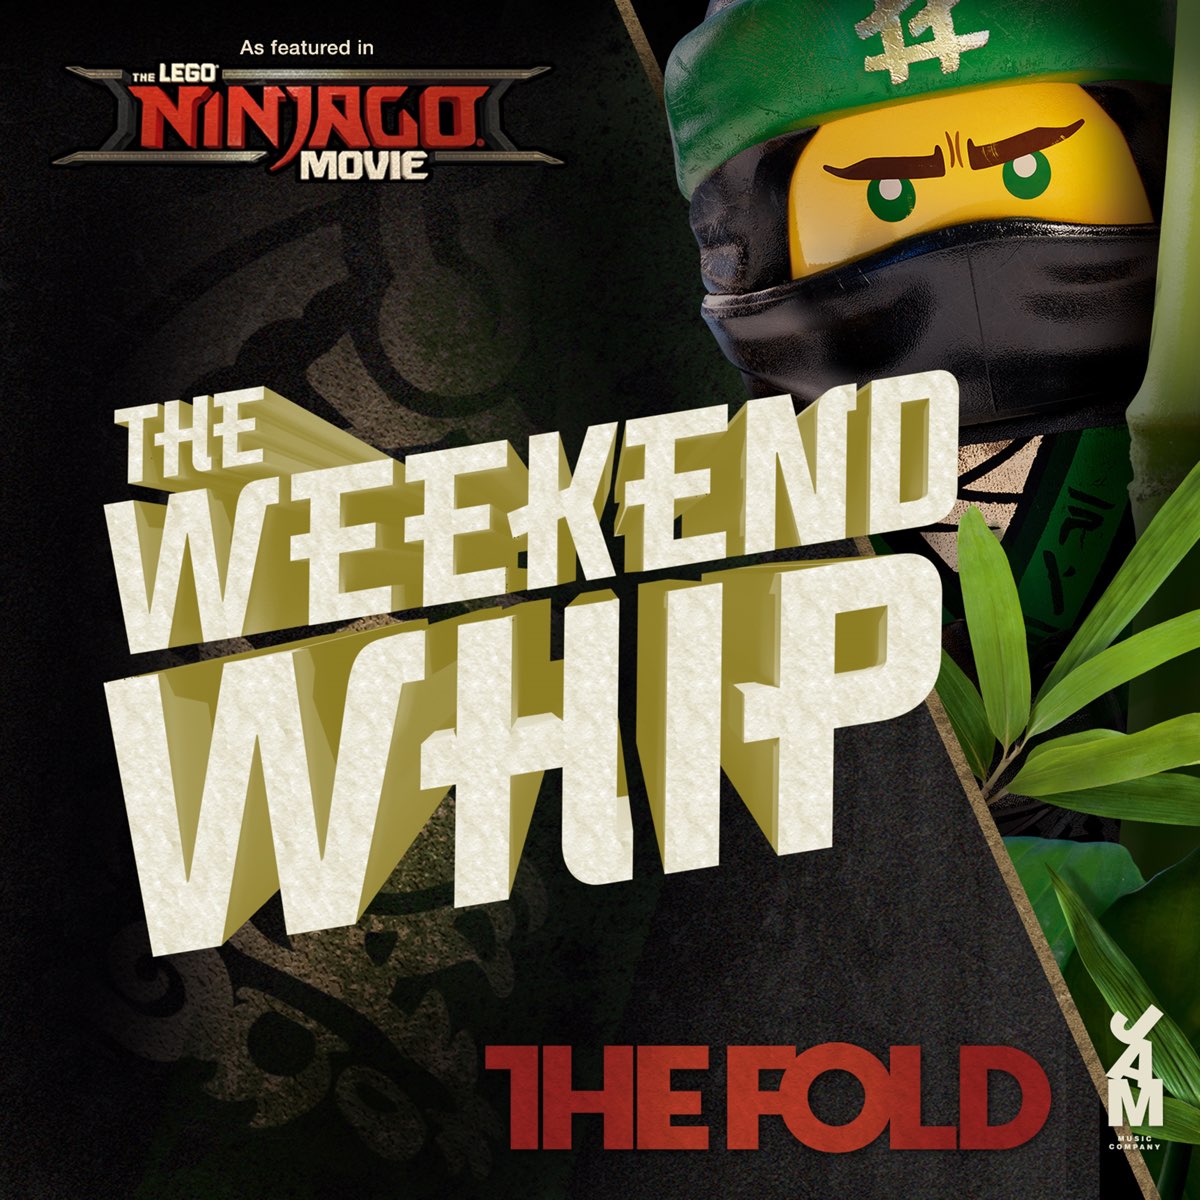 Ninjago the weekend whip